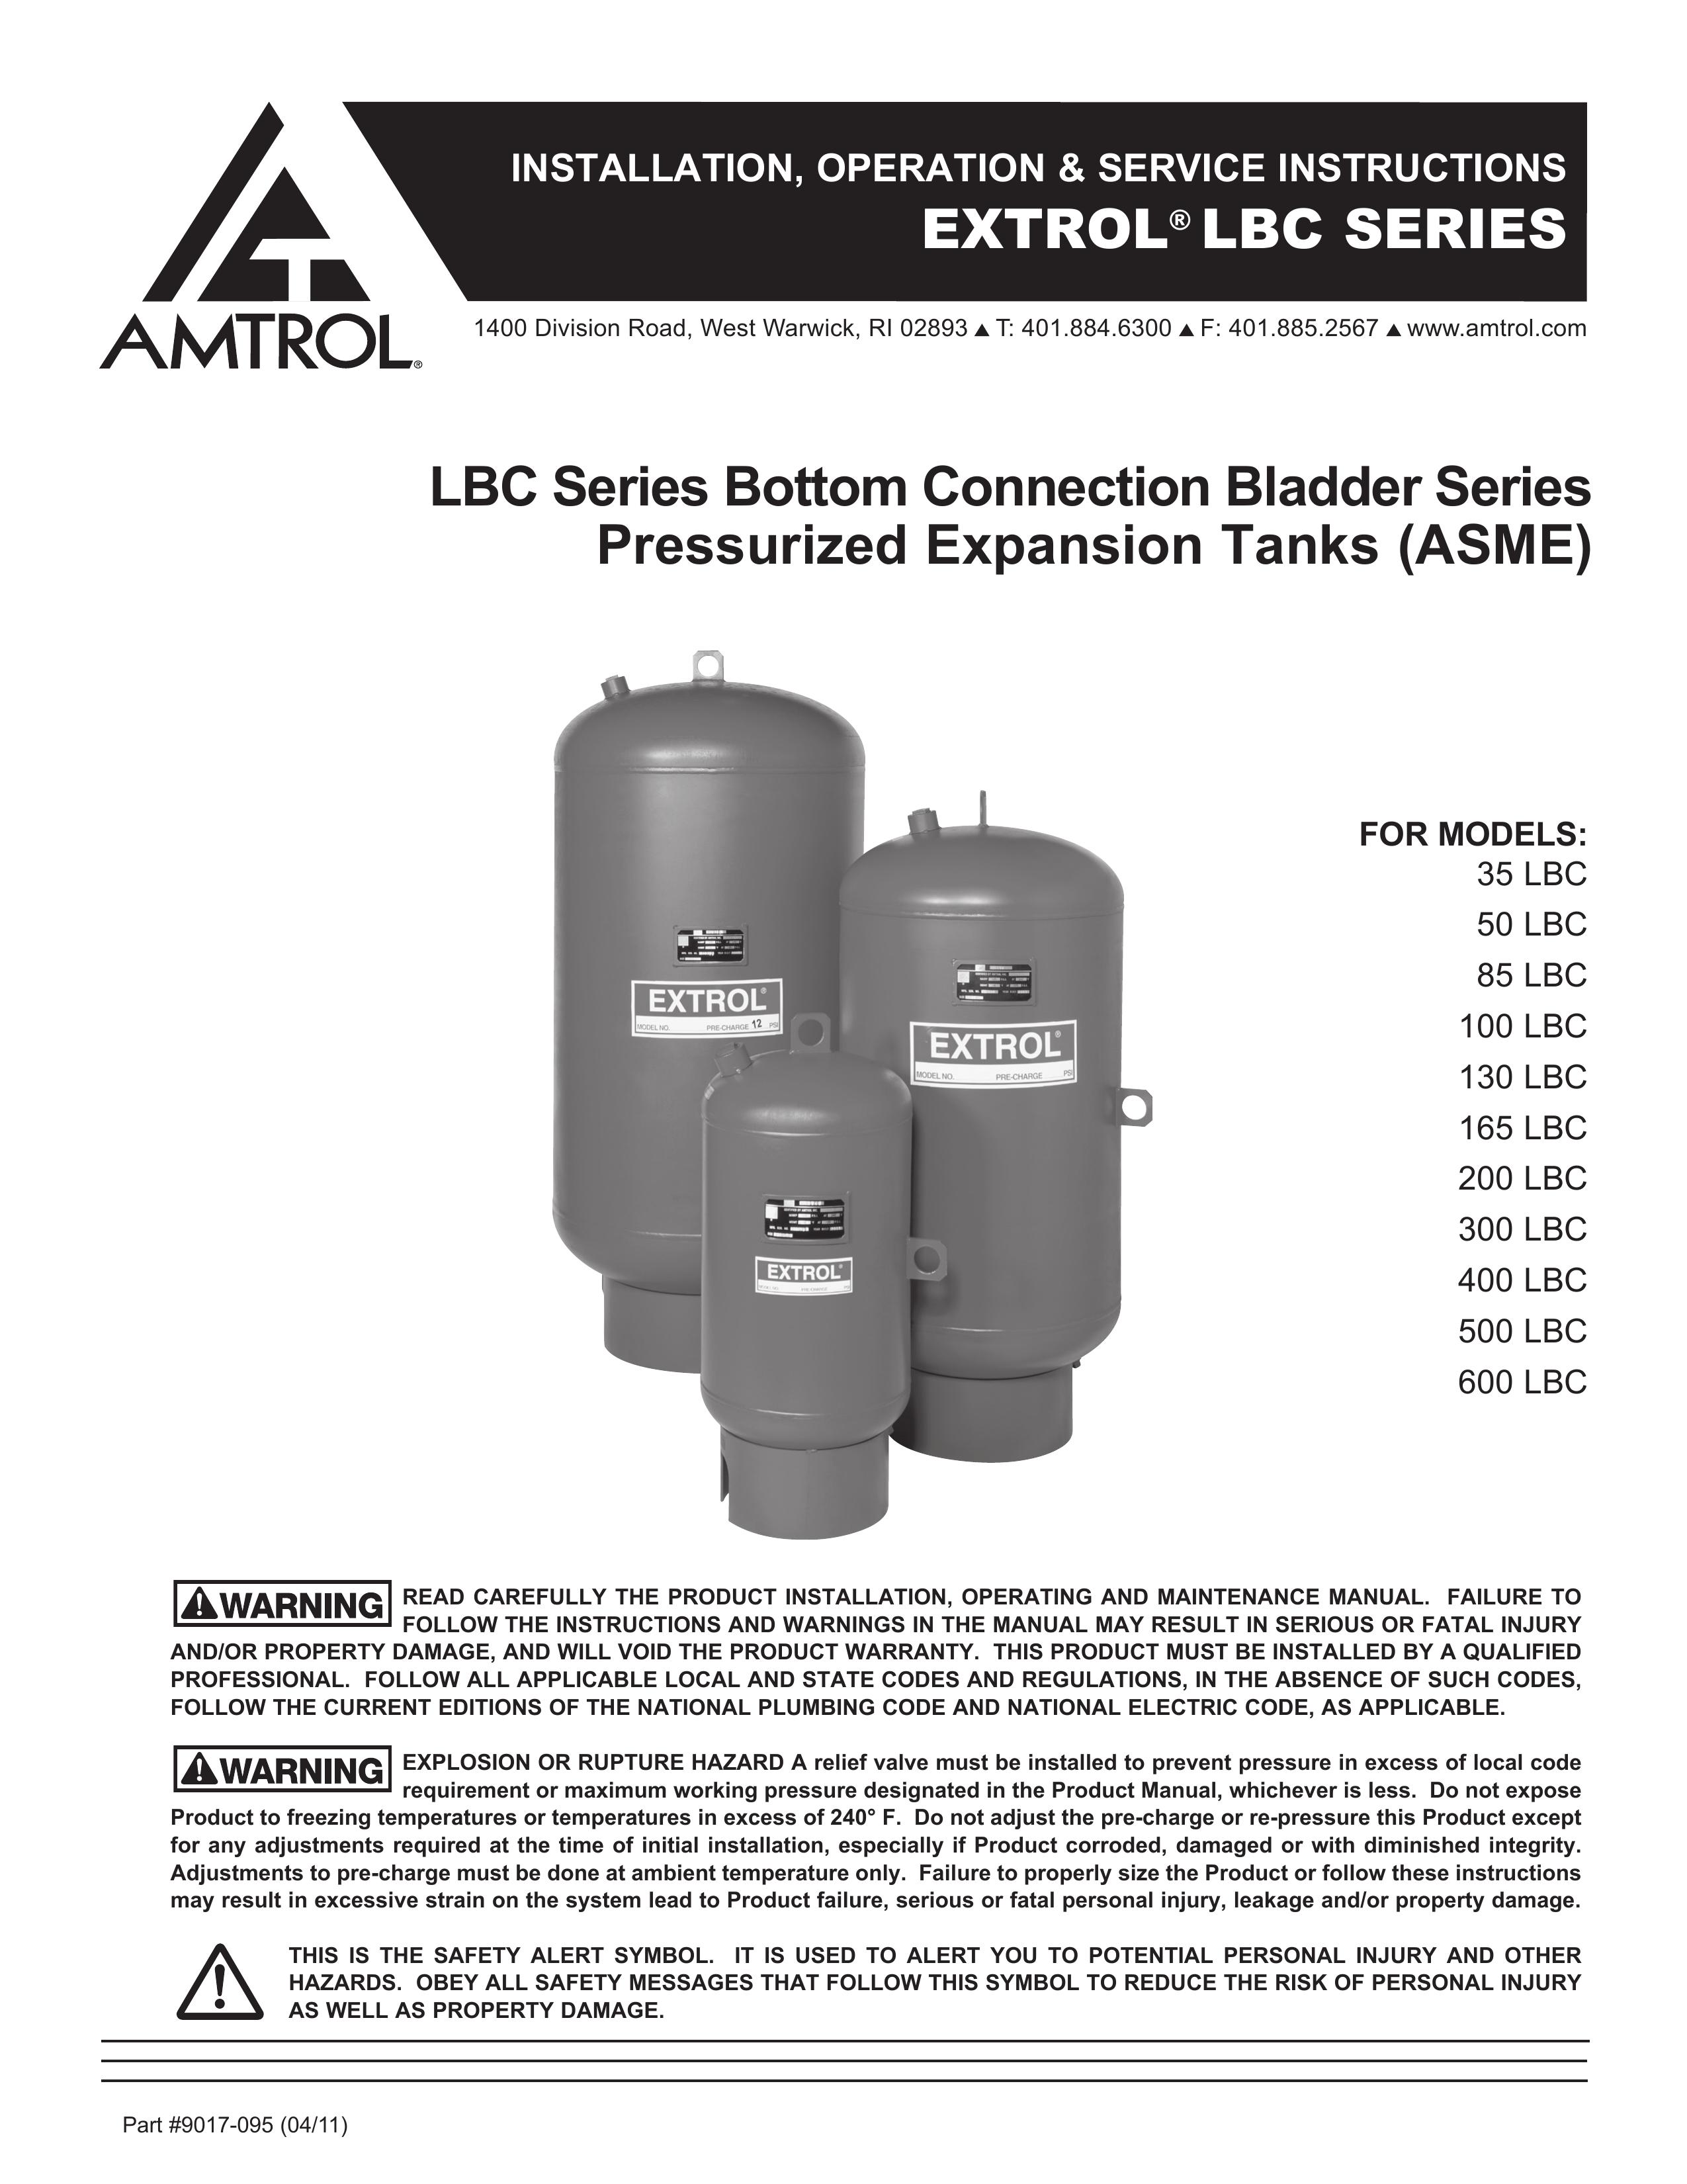 Amtrol 130 LBC Oxygen Equipment User Manual